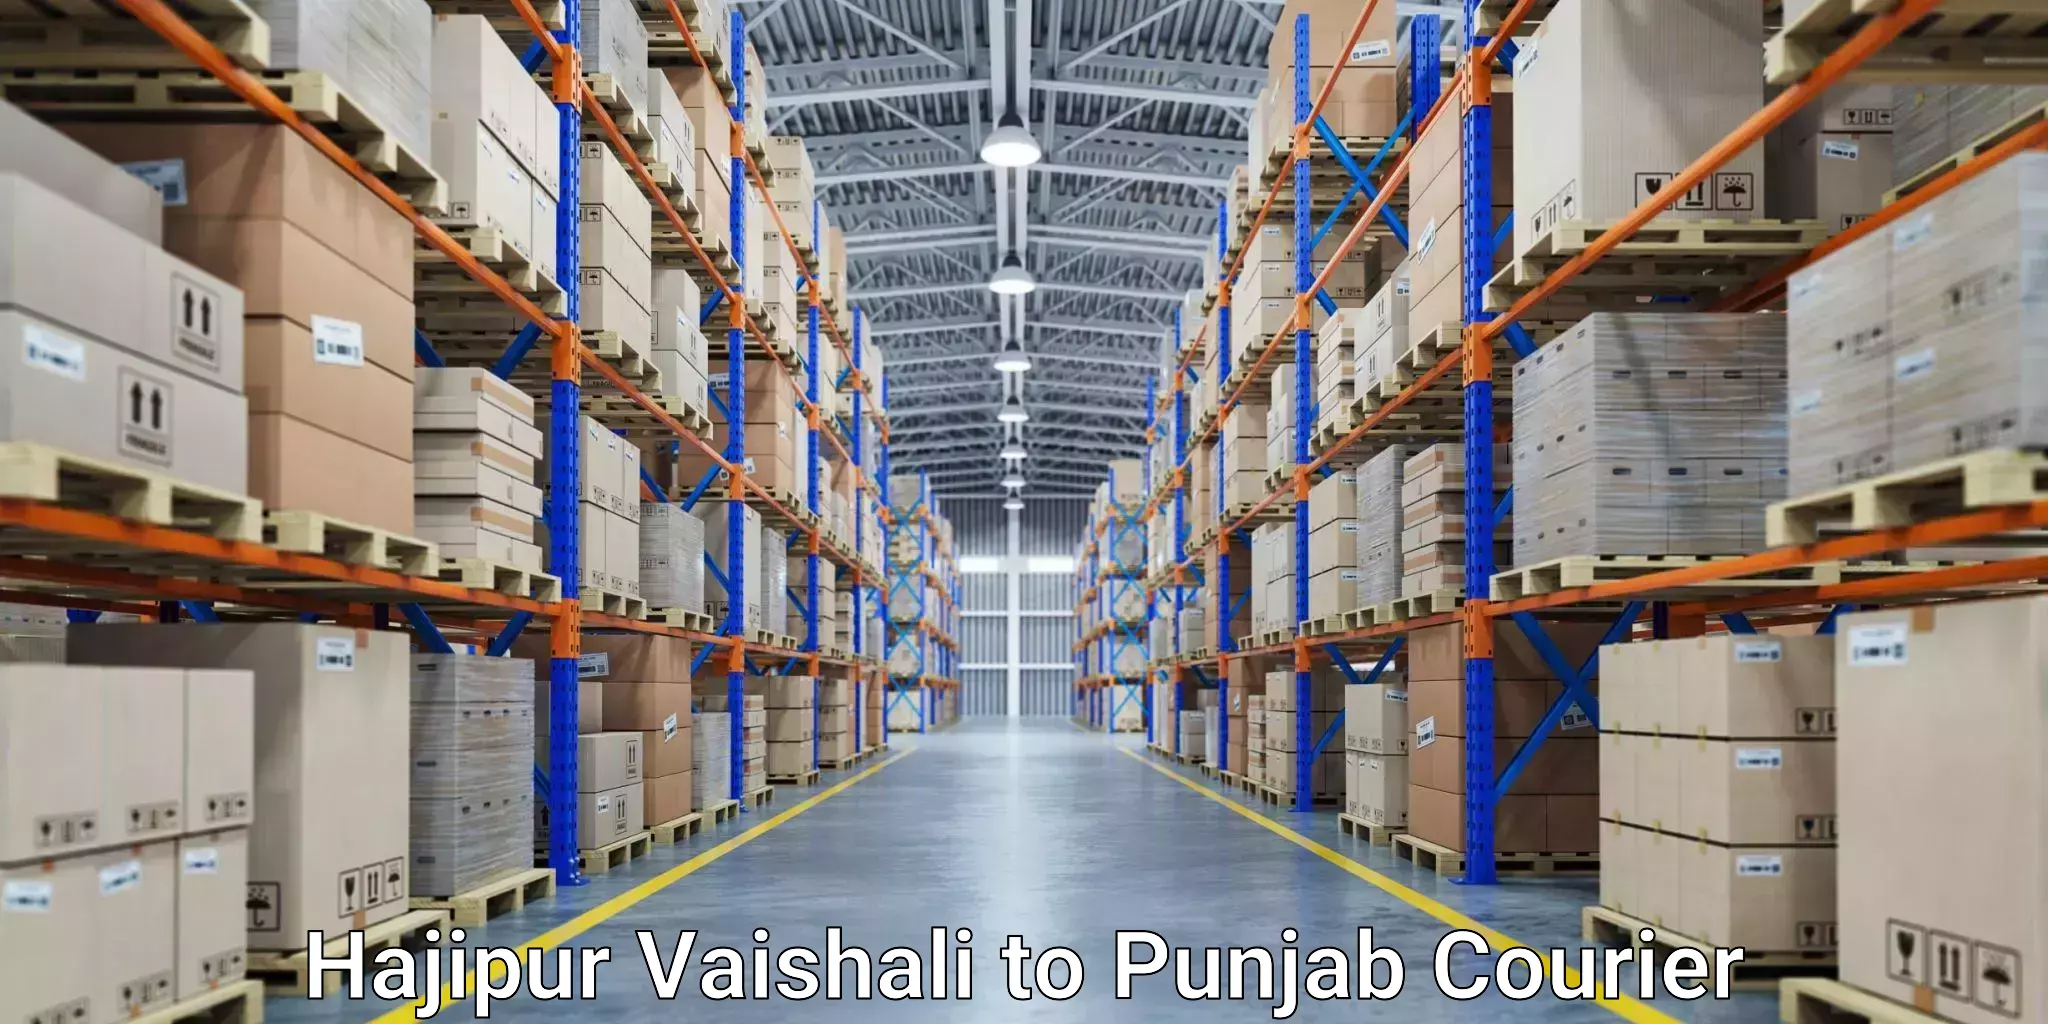 Courier service partnerships in Hajipur Vaishali to Adampur Jalandhar